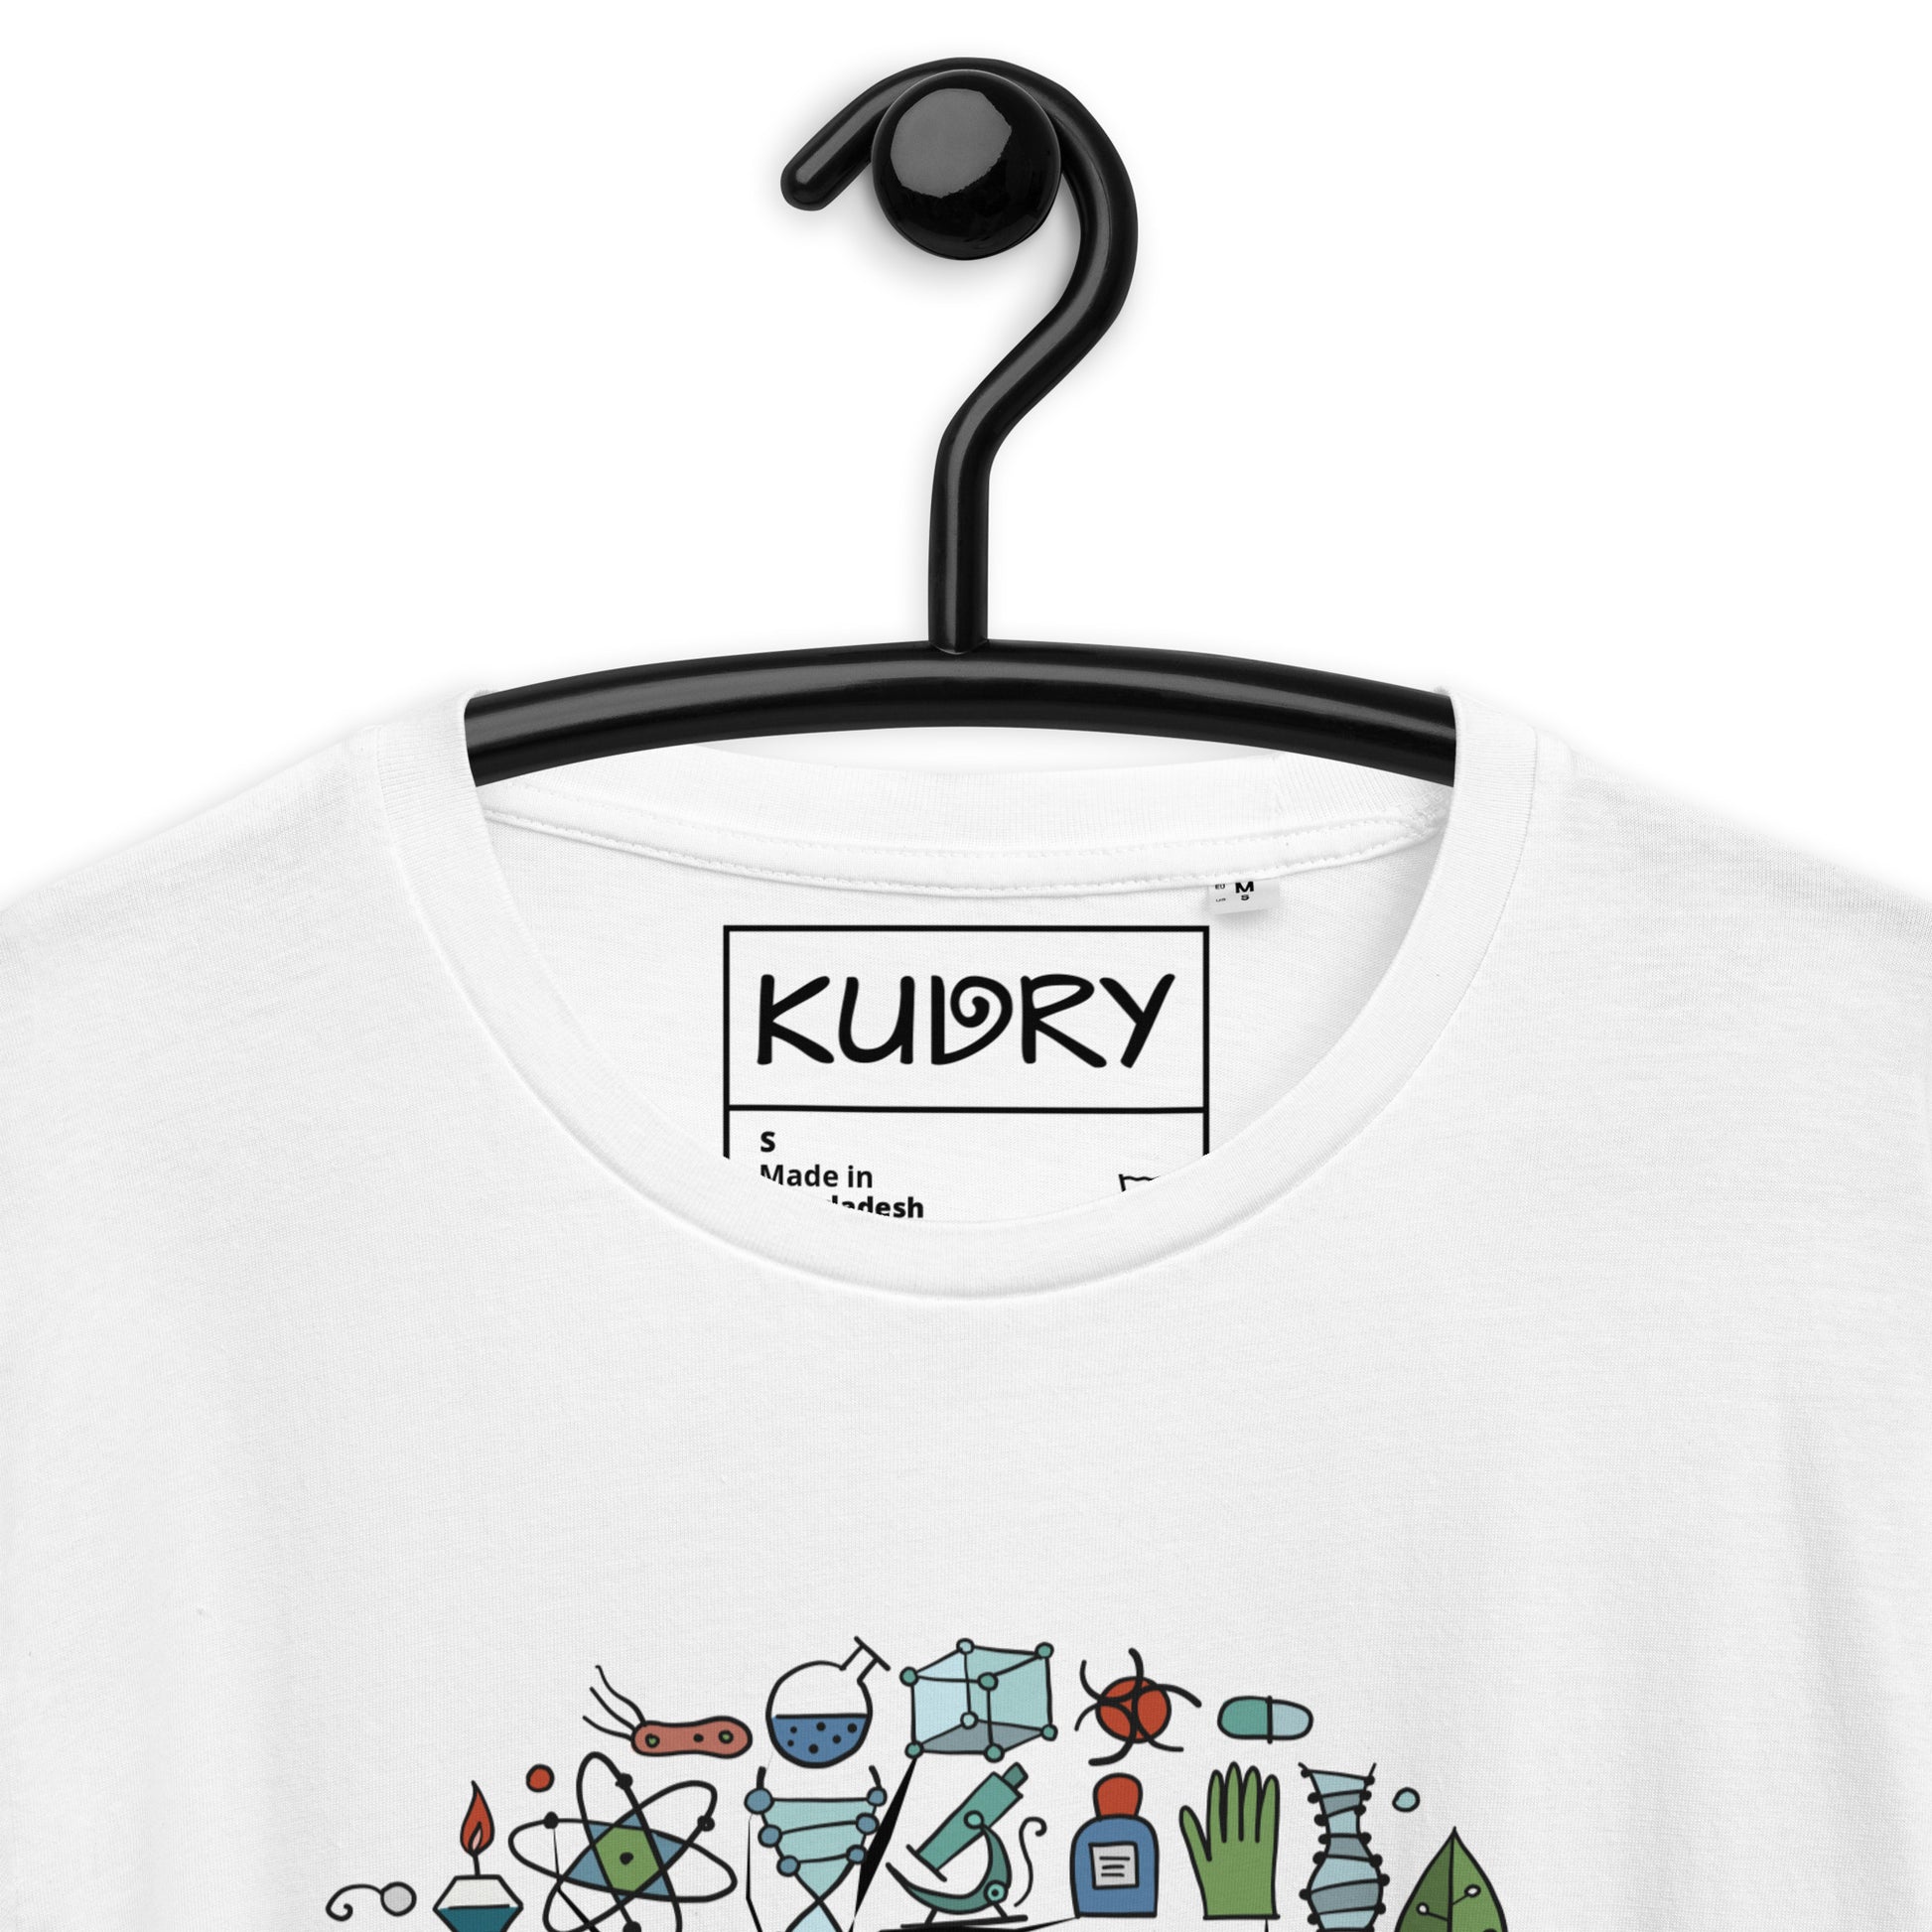 Unisex organic cotton t-shirt Genetic kudrylab